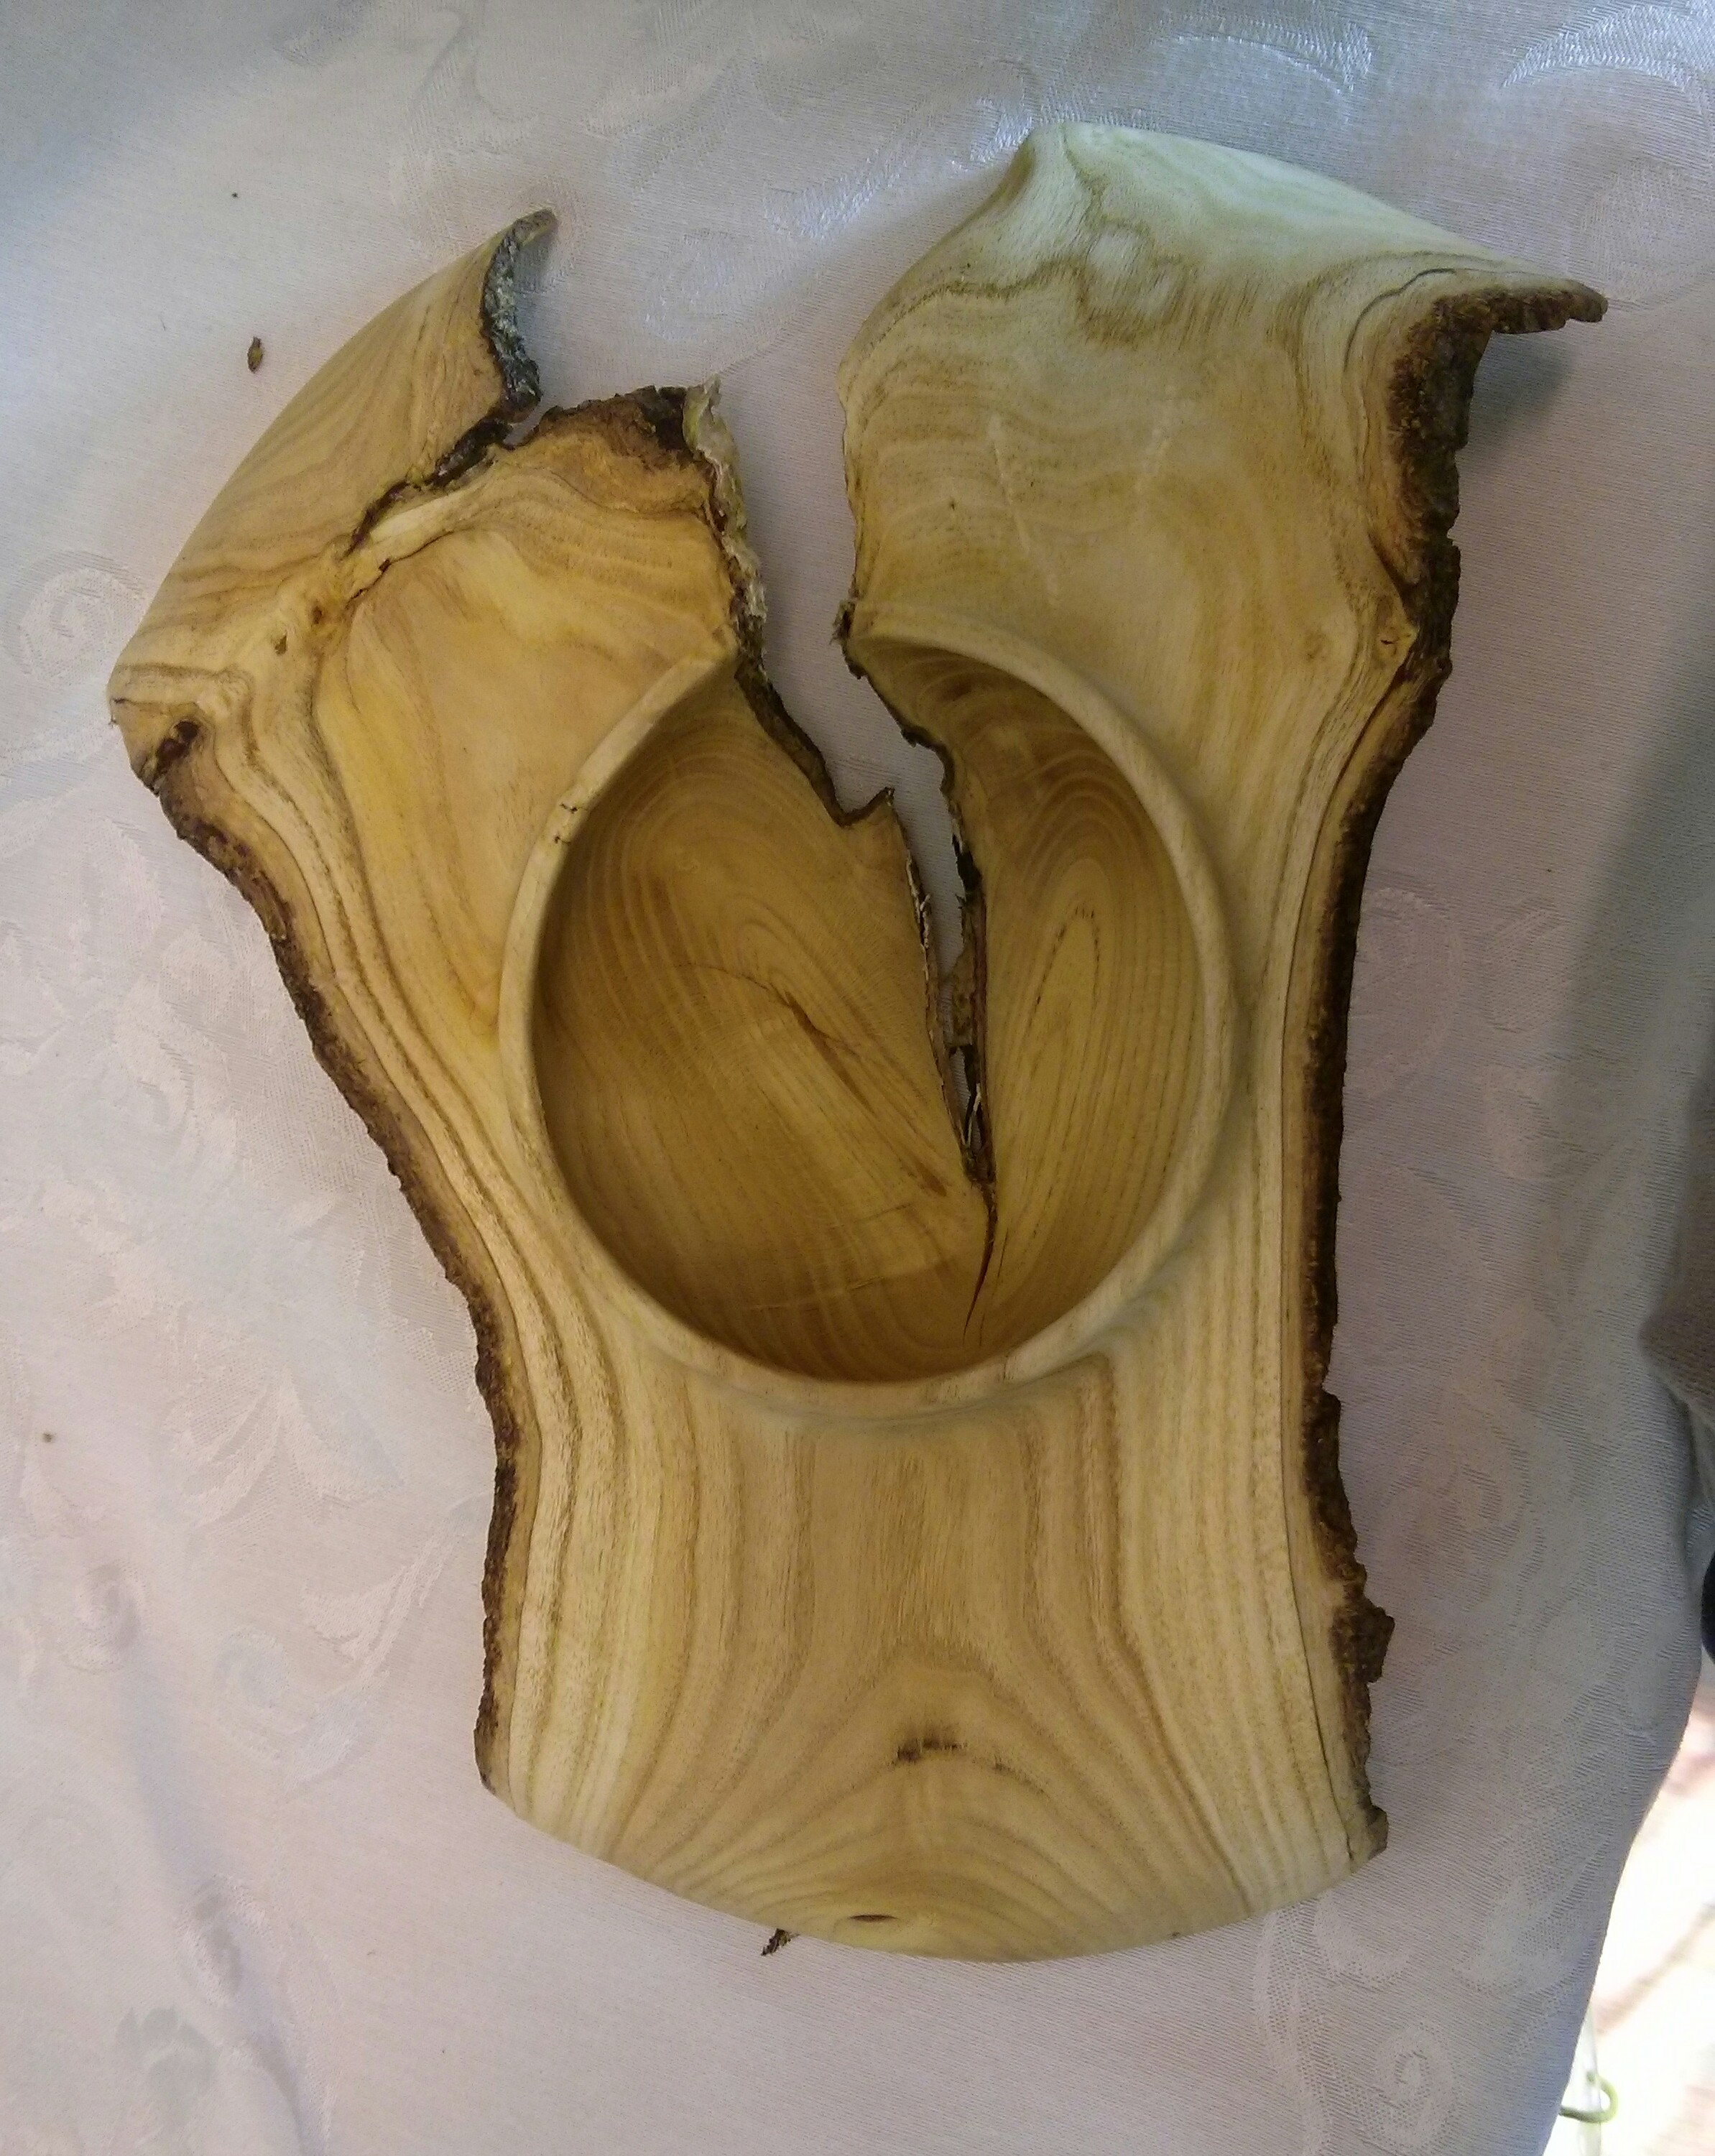 Magnolia wood wing bowl